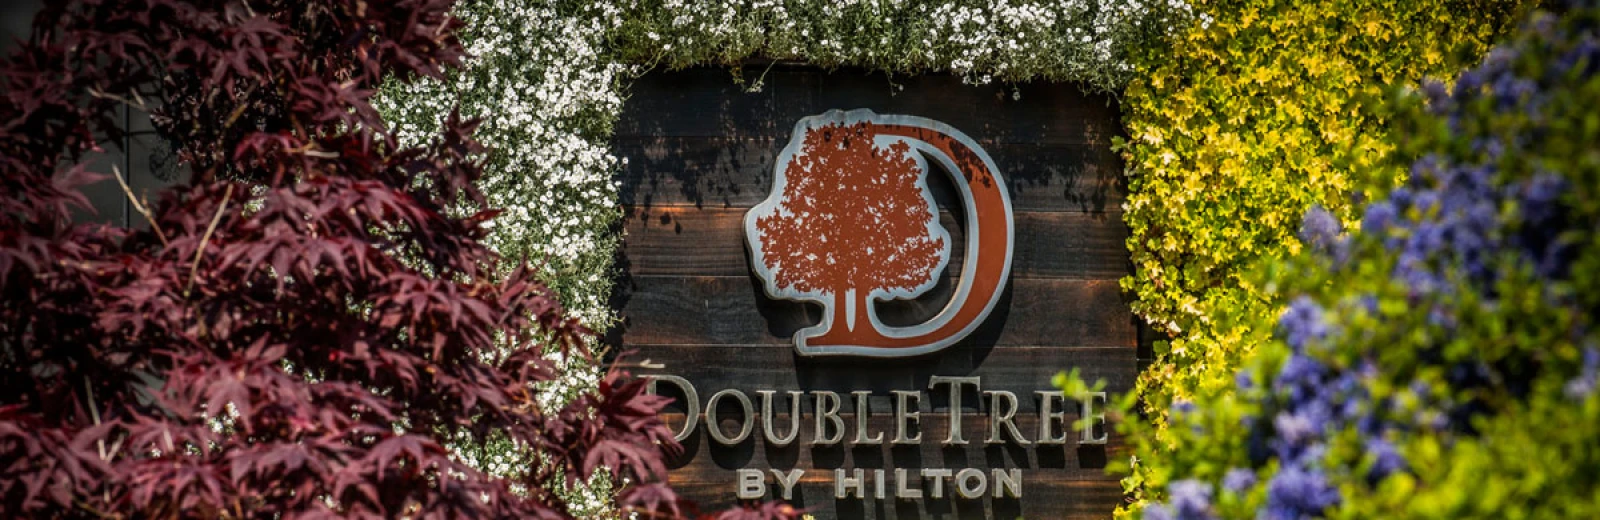 DoubleTree by Hilton Cadbury House Hotel